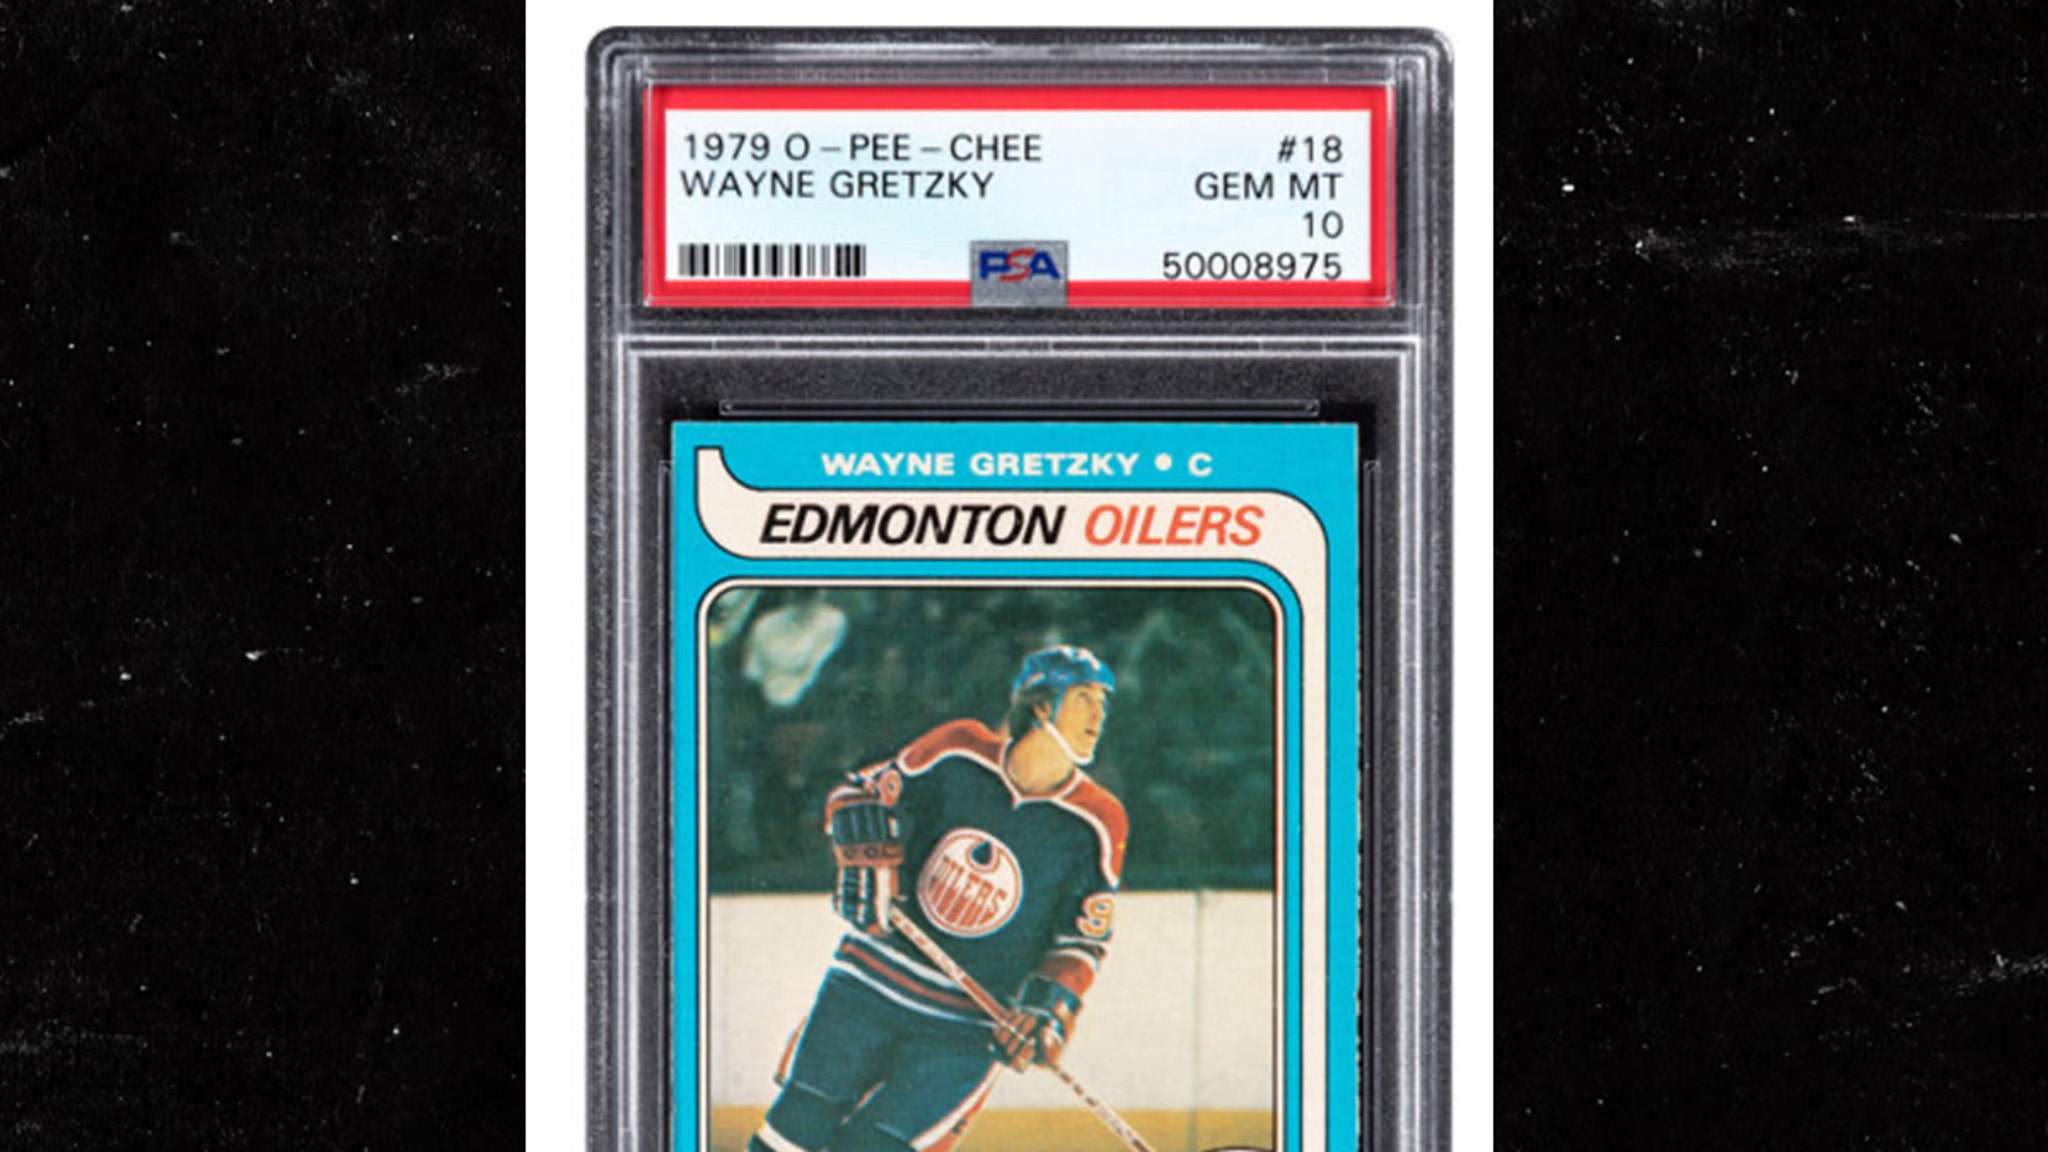 $1.29 million for a hockey card? Wayne Gretzky rookie card is